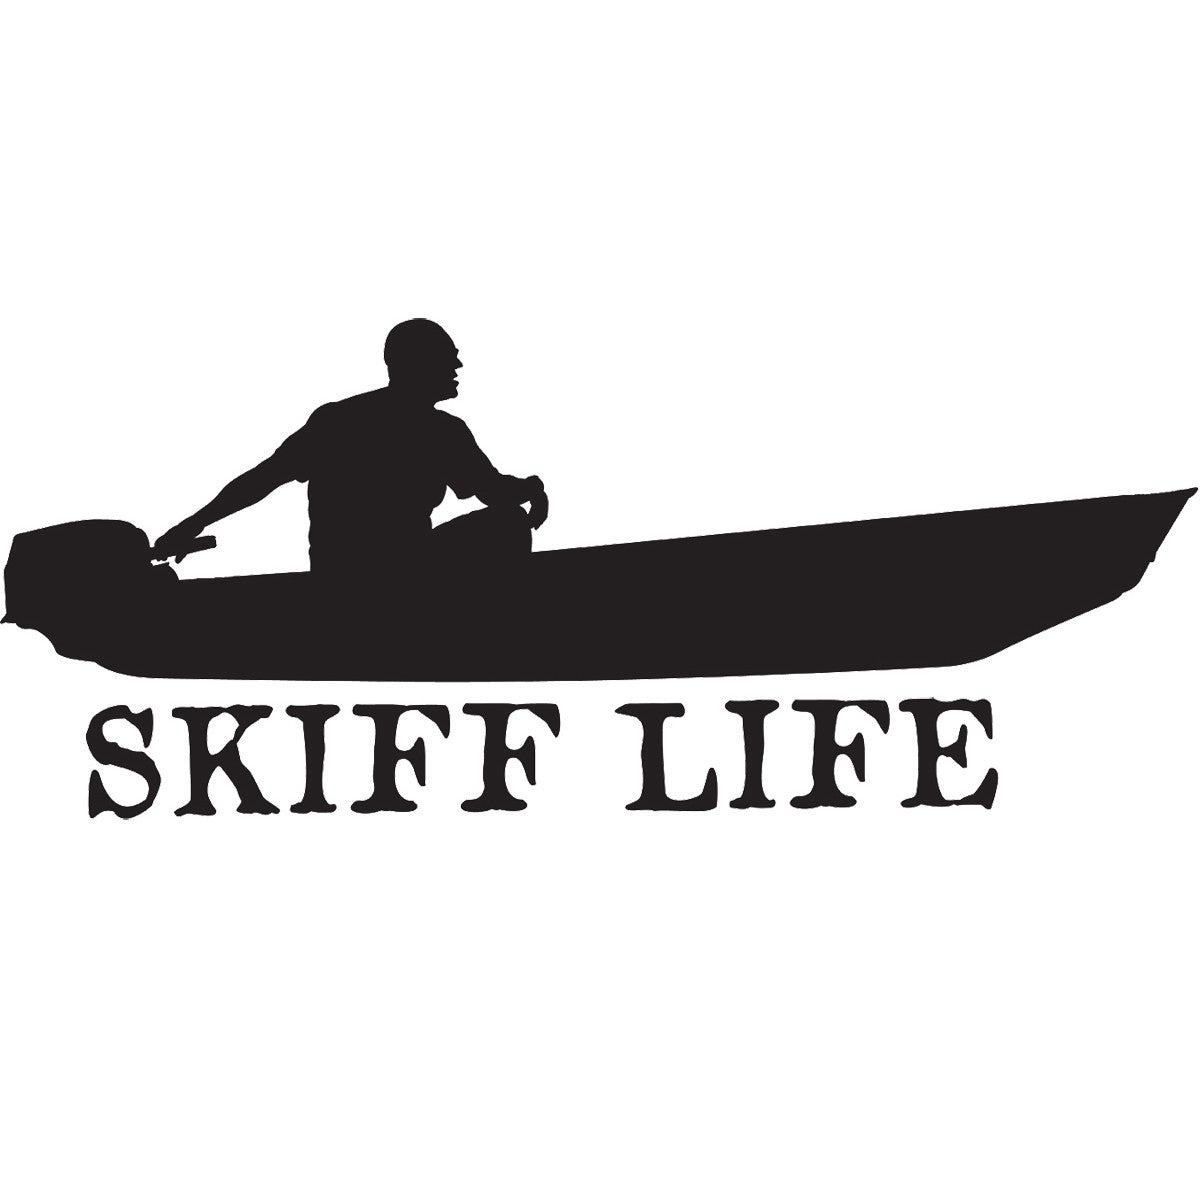 Jon Boat Decals Aluminum Boat 8X3 Outdoor Vinyl Sticker – Skiff Life